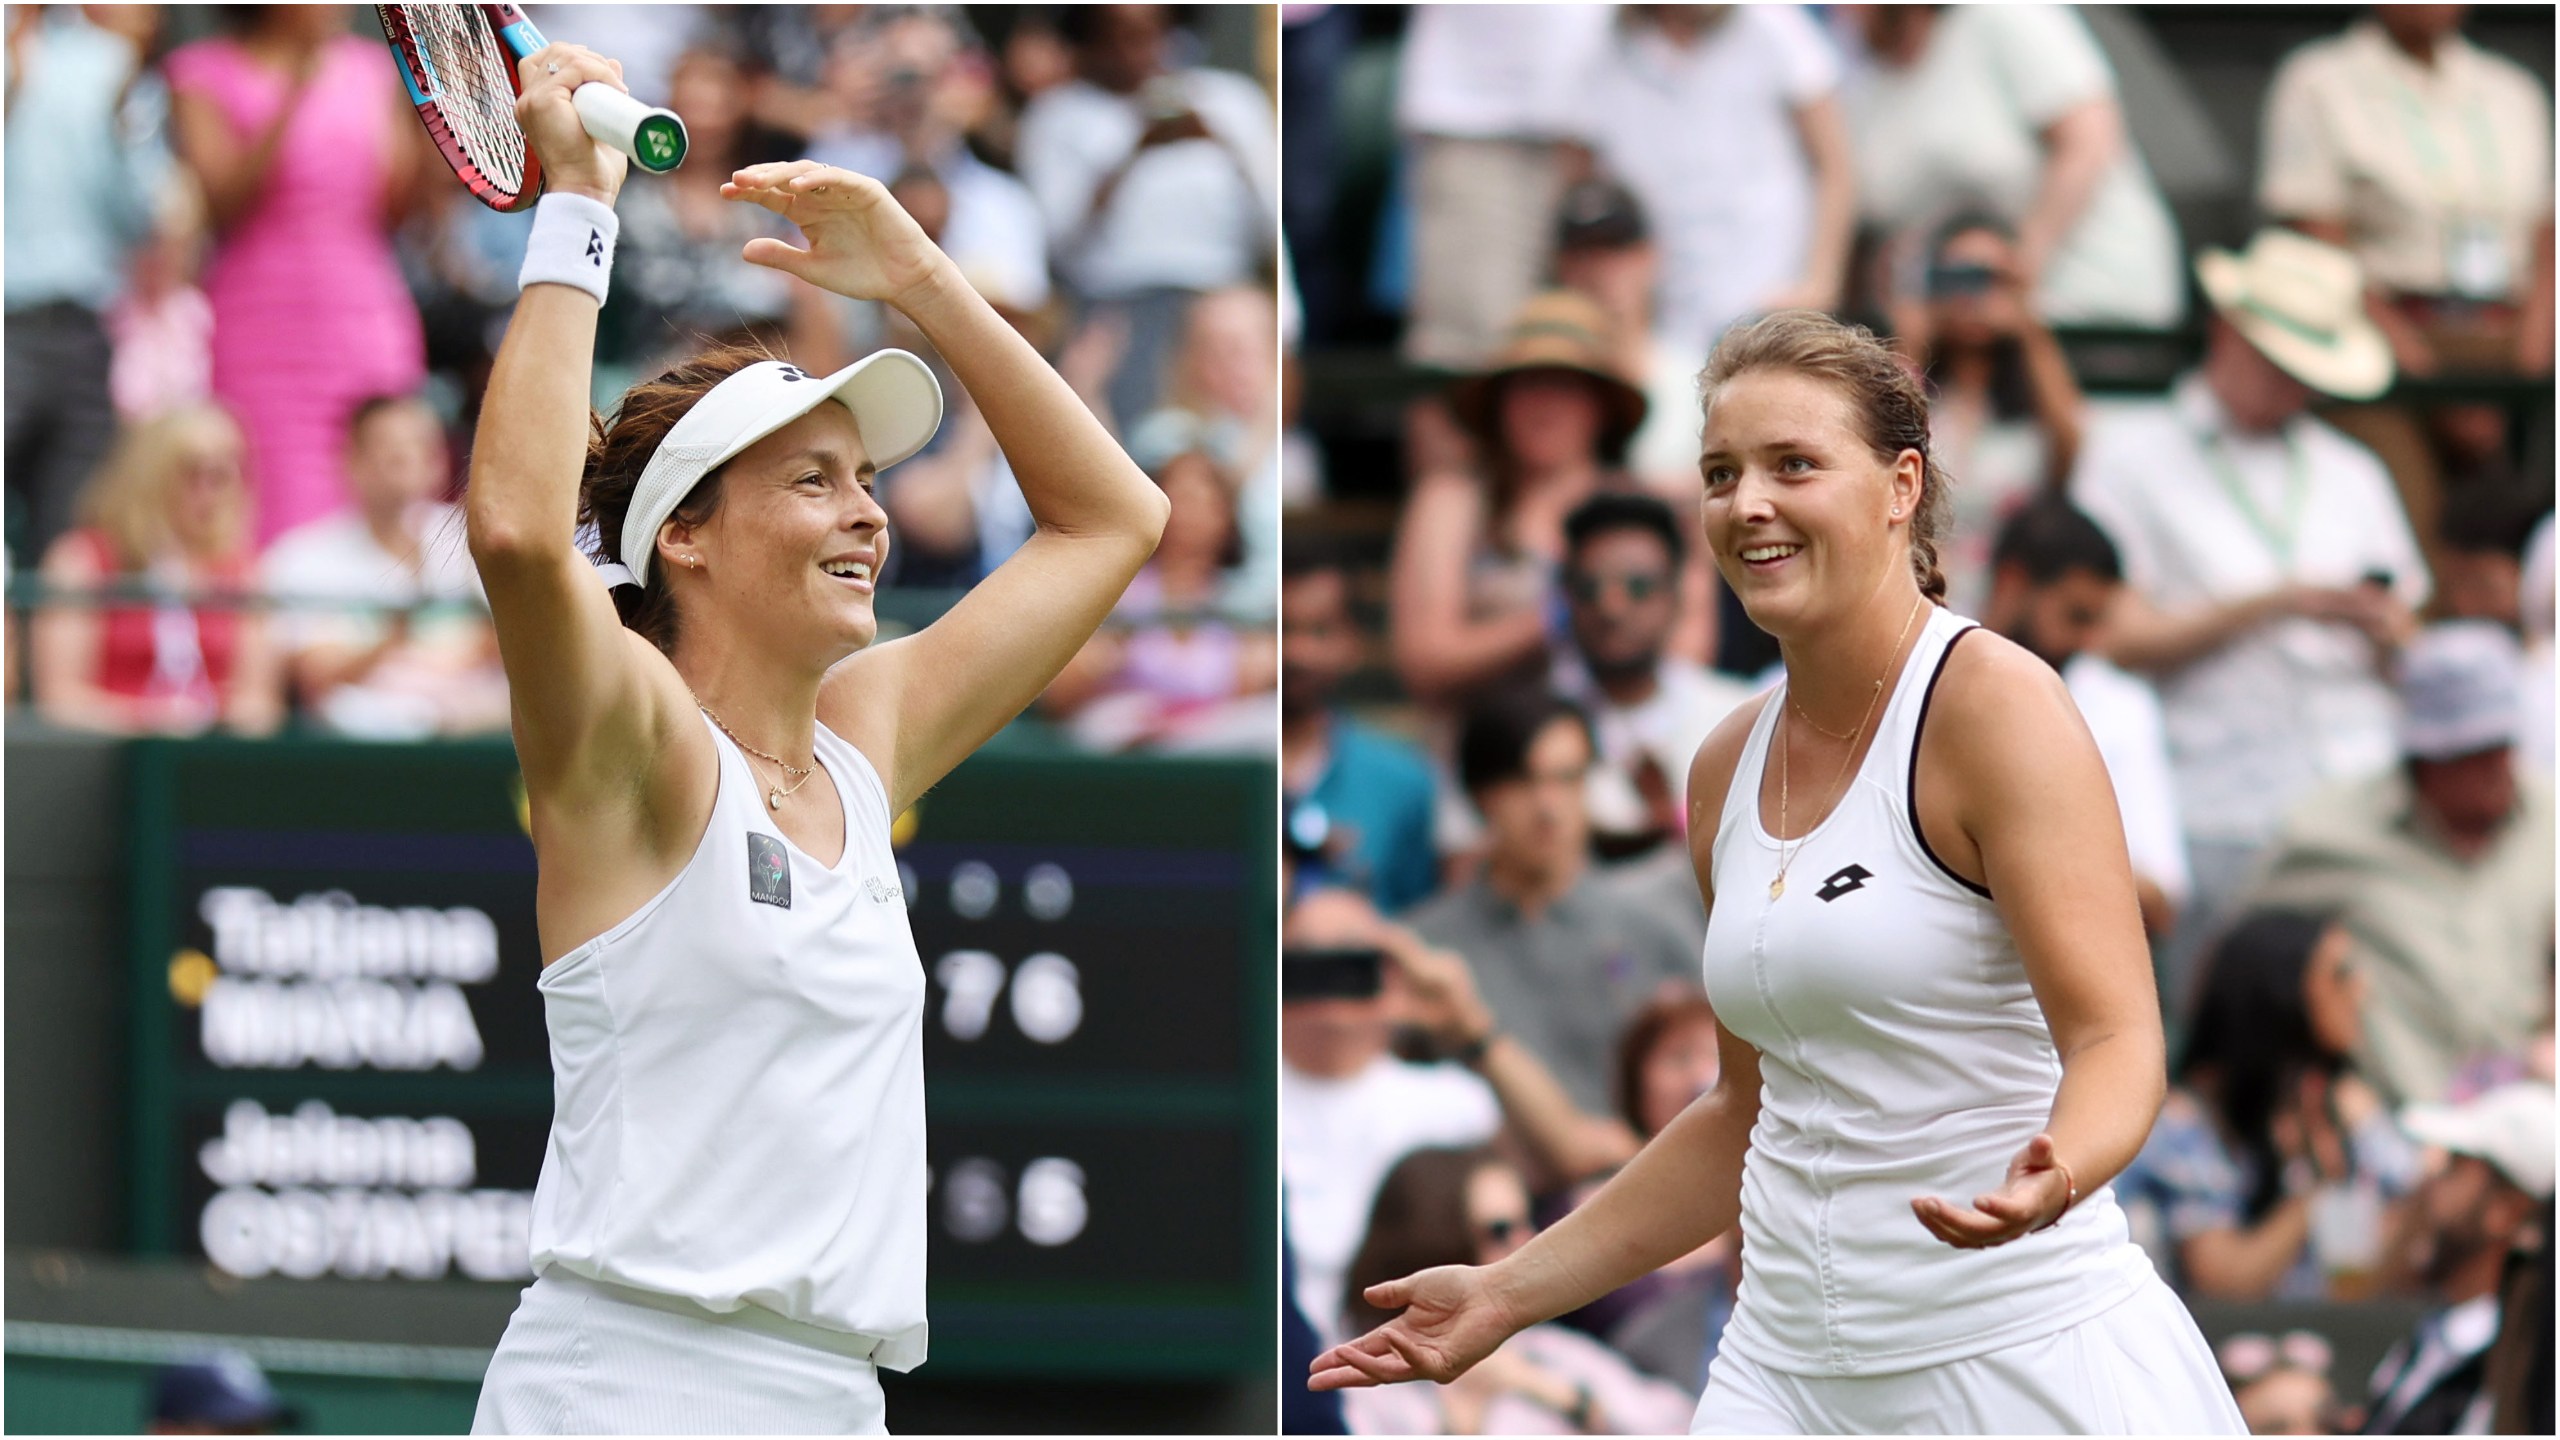 Tatjana Maria saves two match points against Jelena Ostapenko to set all-German Wimbledon quarterfinal with Jule Niemeier